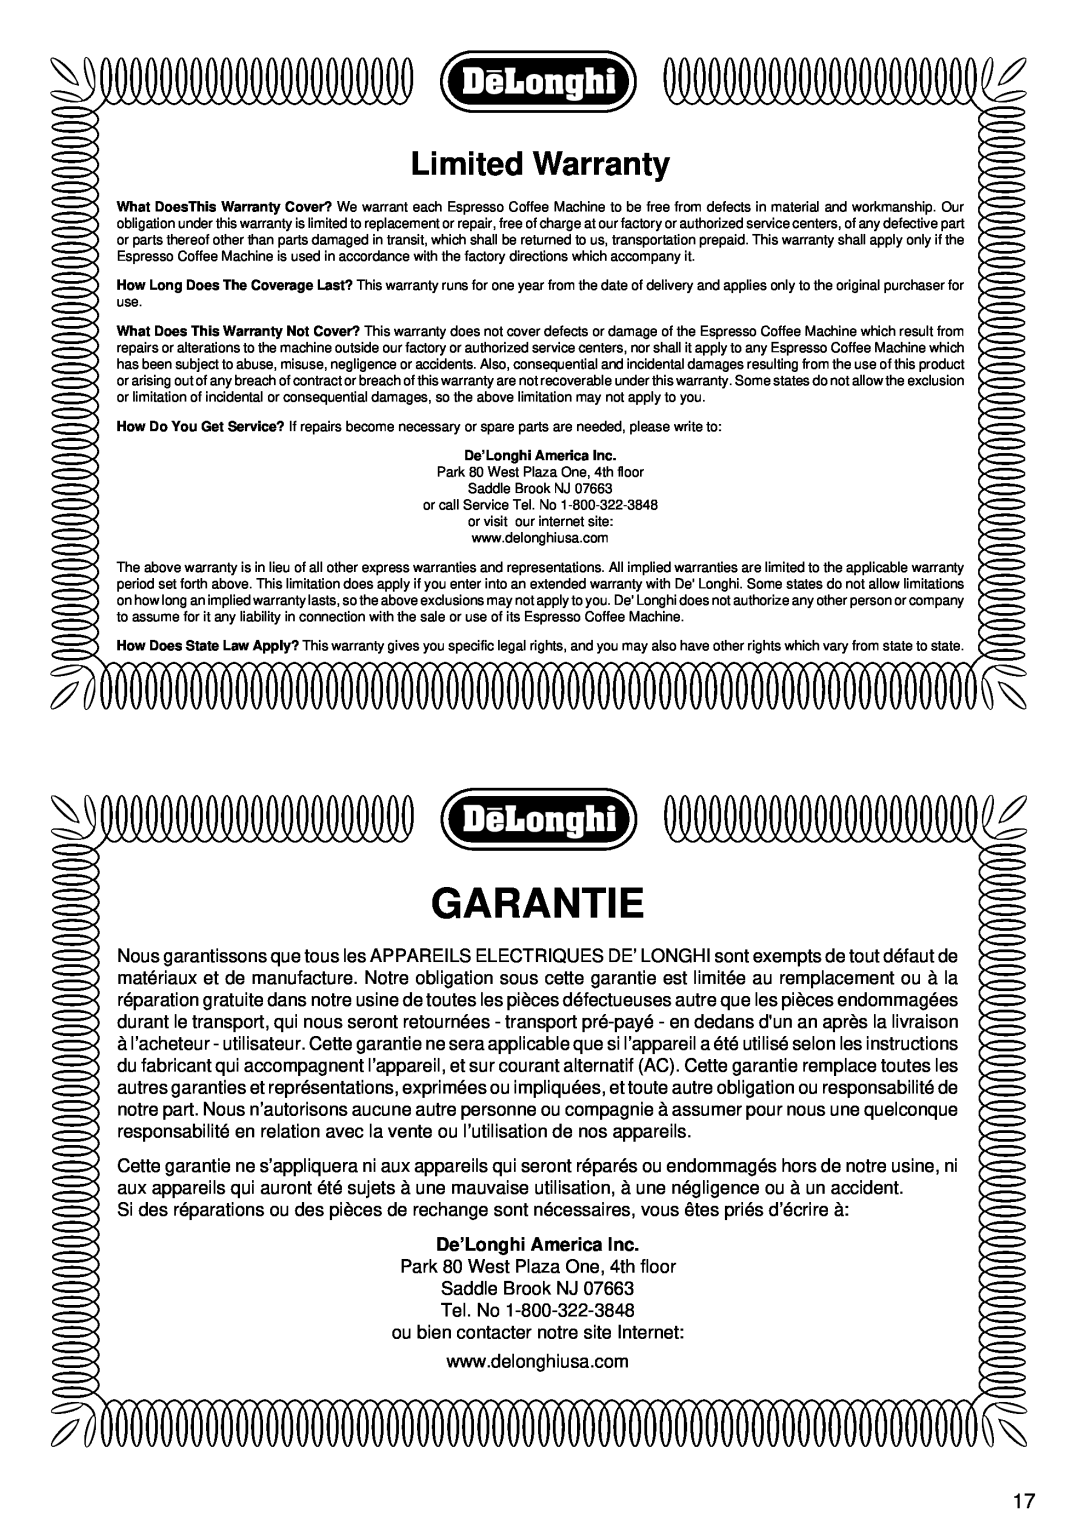 DeLonghi BAR6 manual Garantie, Limited Warranty, De’Longhi America Inc 